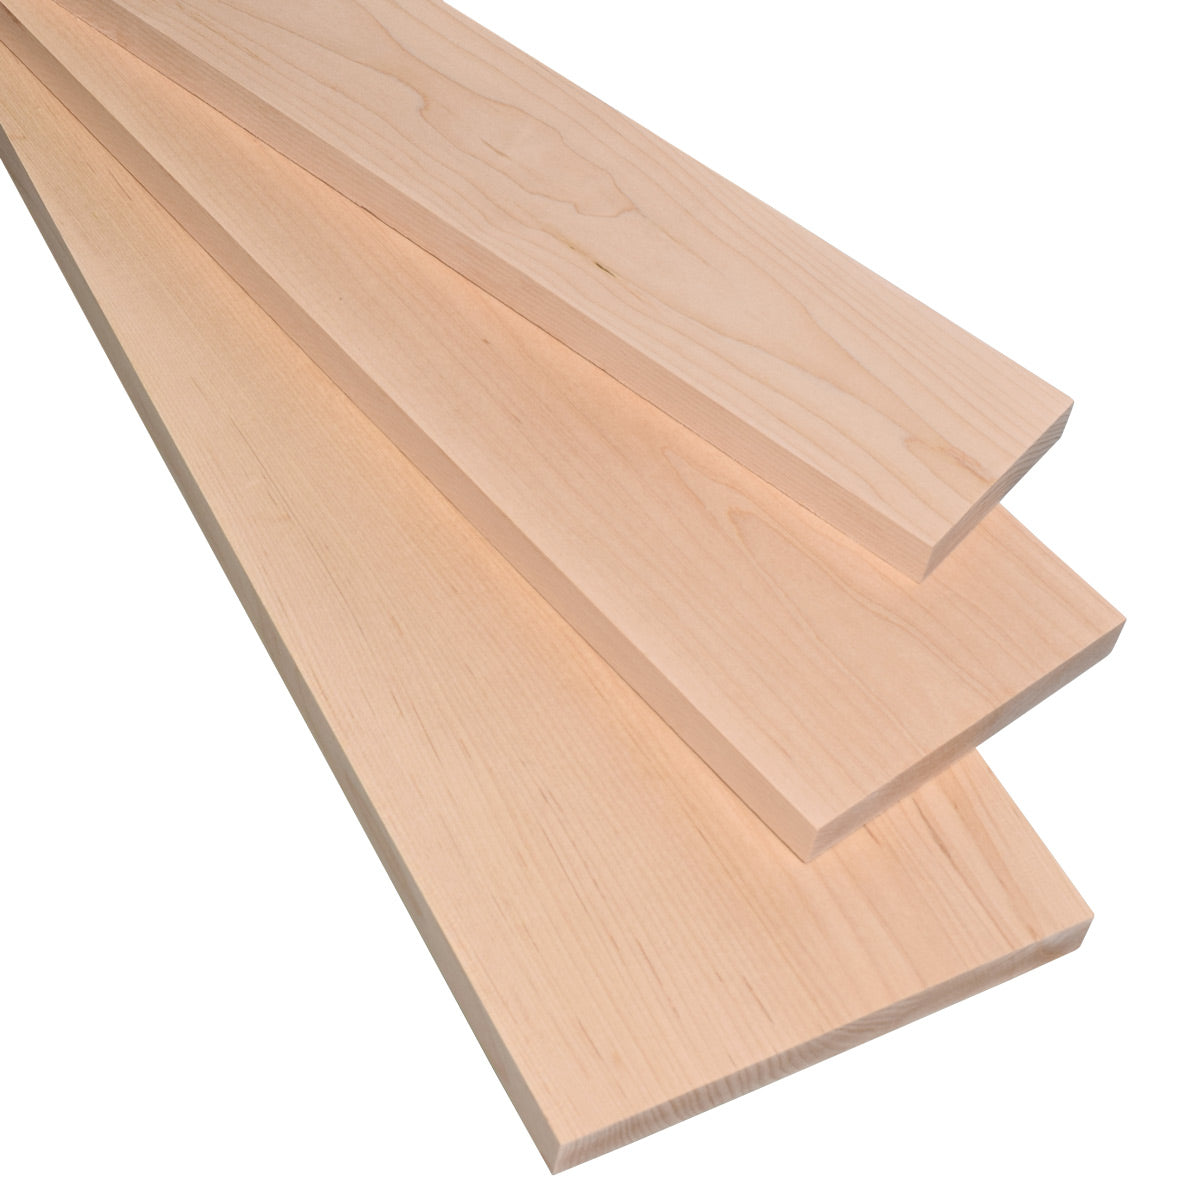 10/4 Hard Maple Lumber